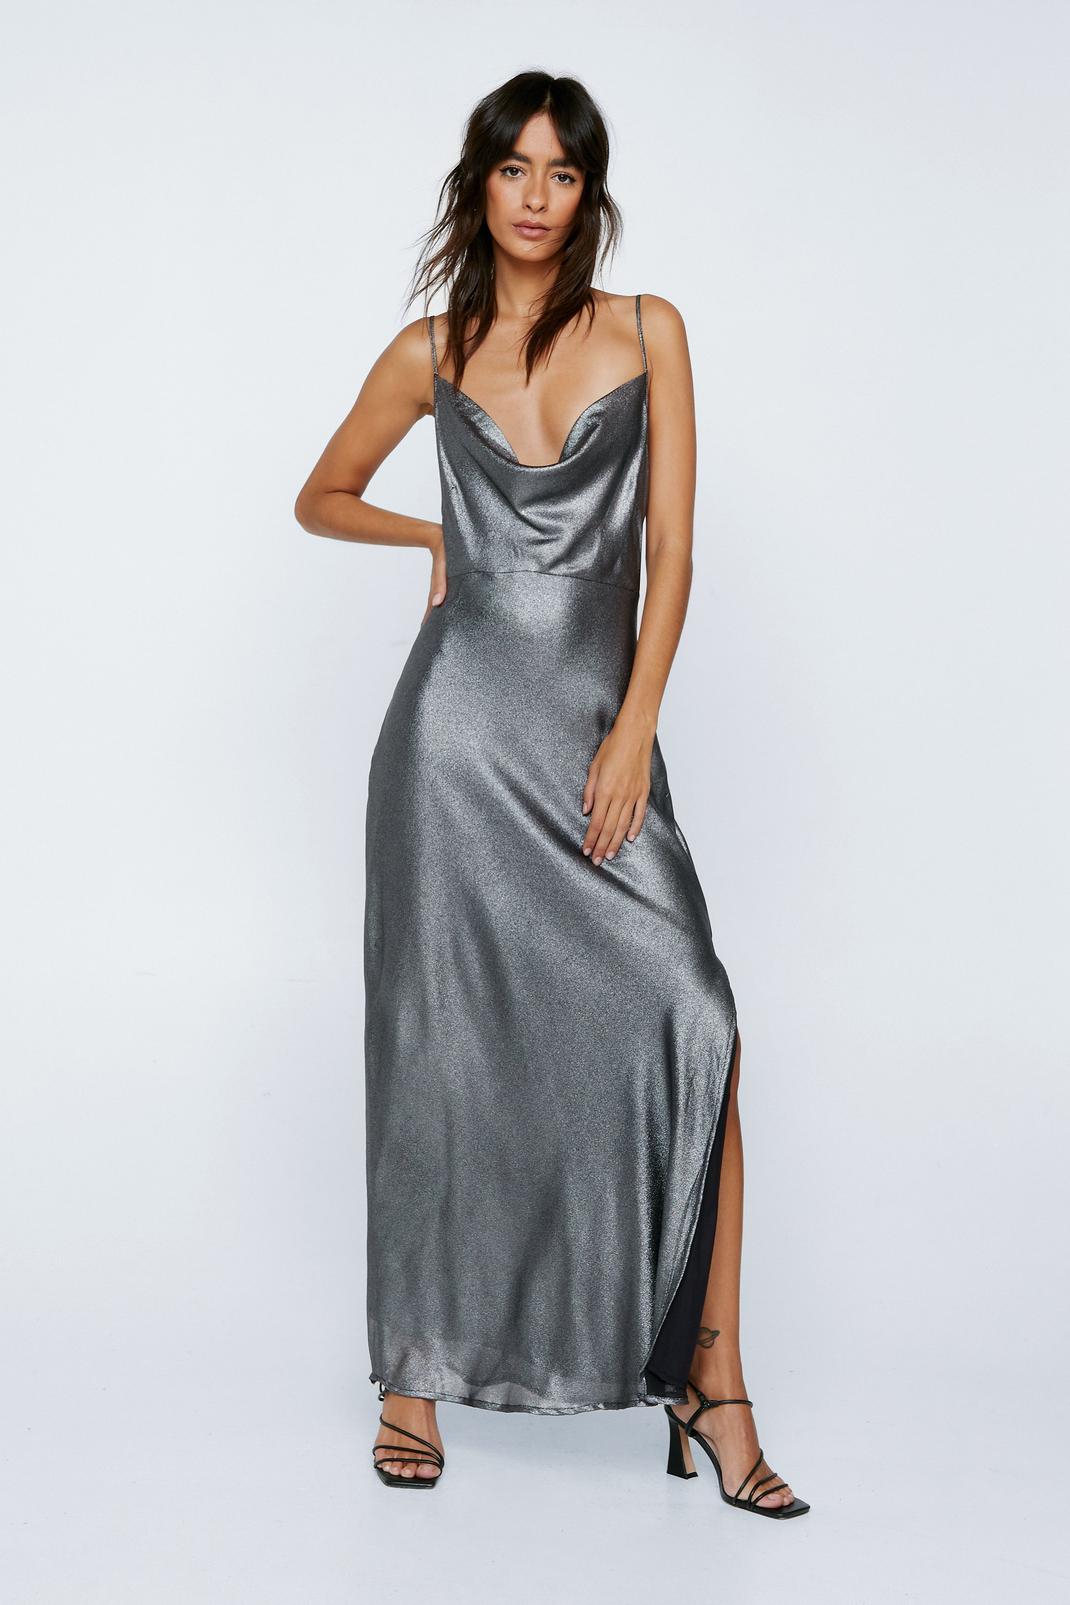 Cowl Neck Dress - Taupe Dress - Bodycon Dress - $44.00 - Lulus